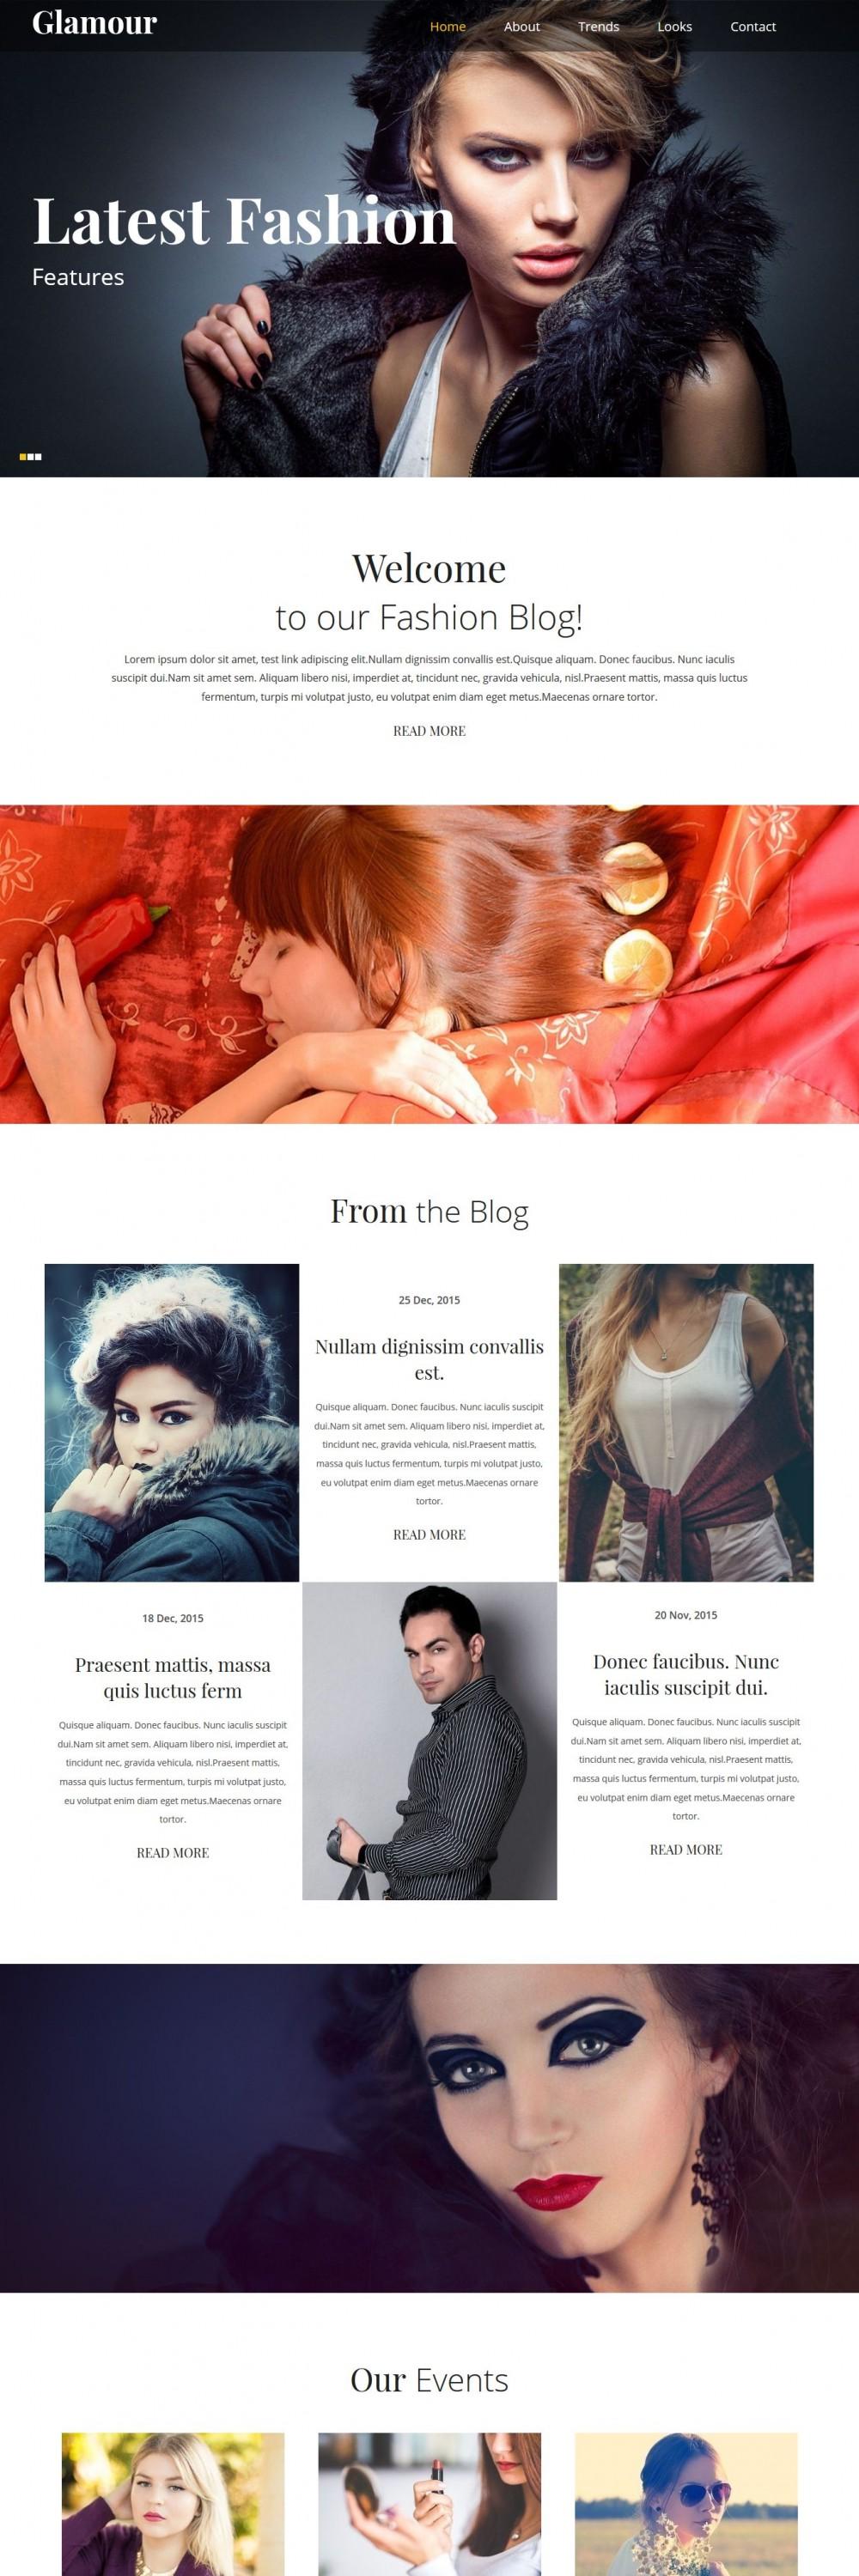 Glamour Fashion Blogger Template - TemplateToaster